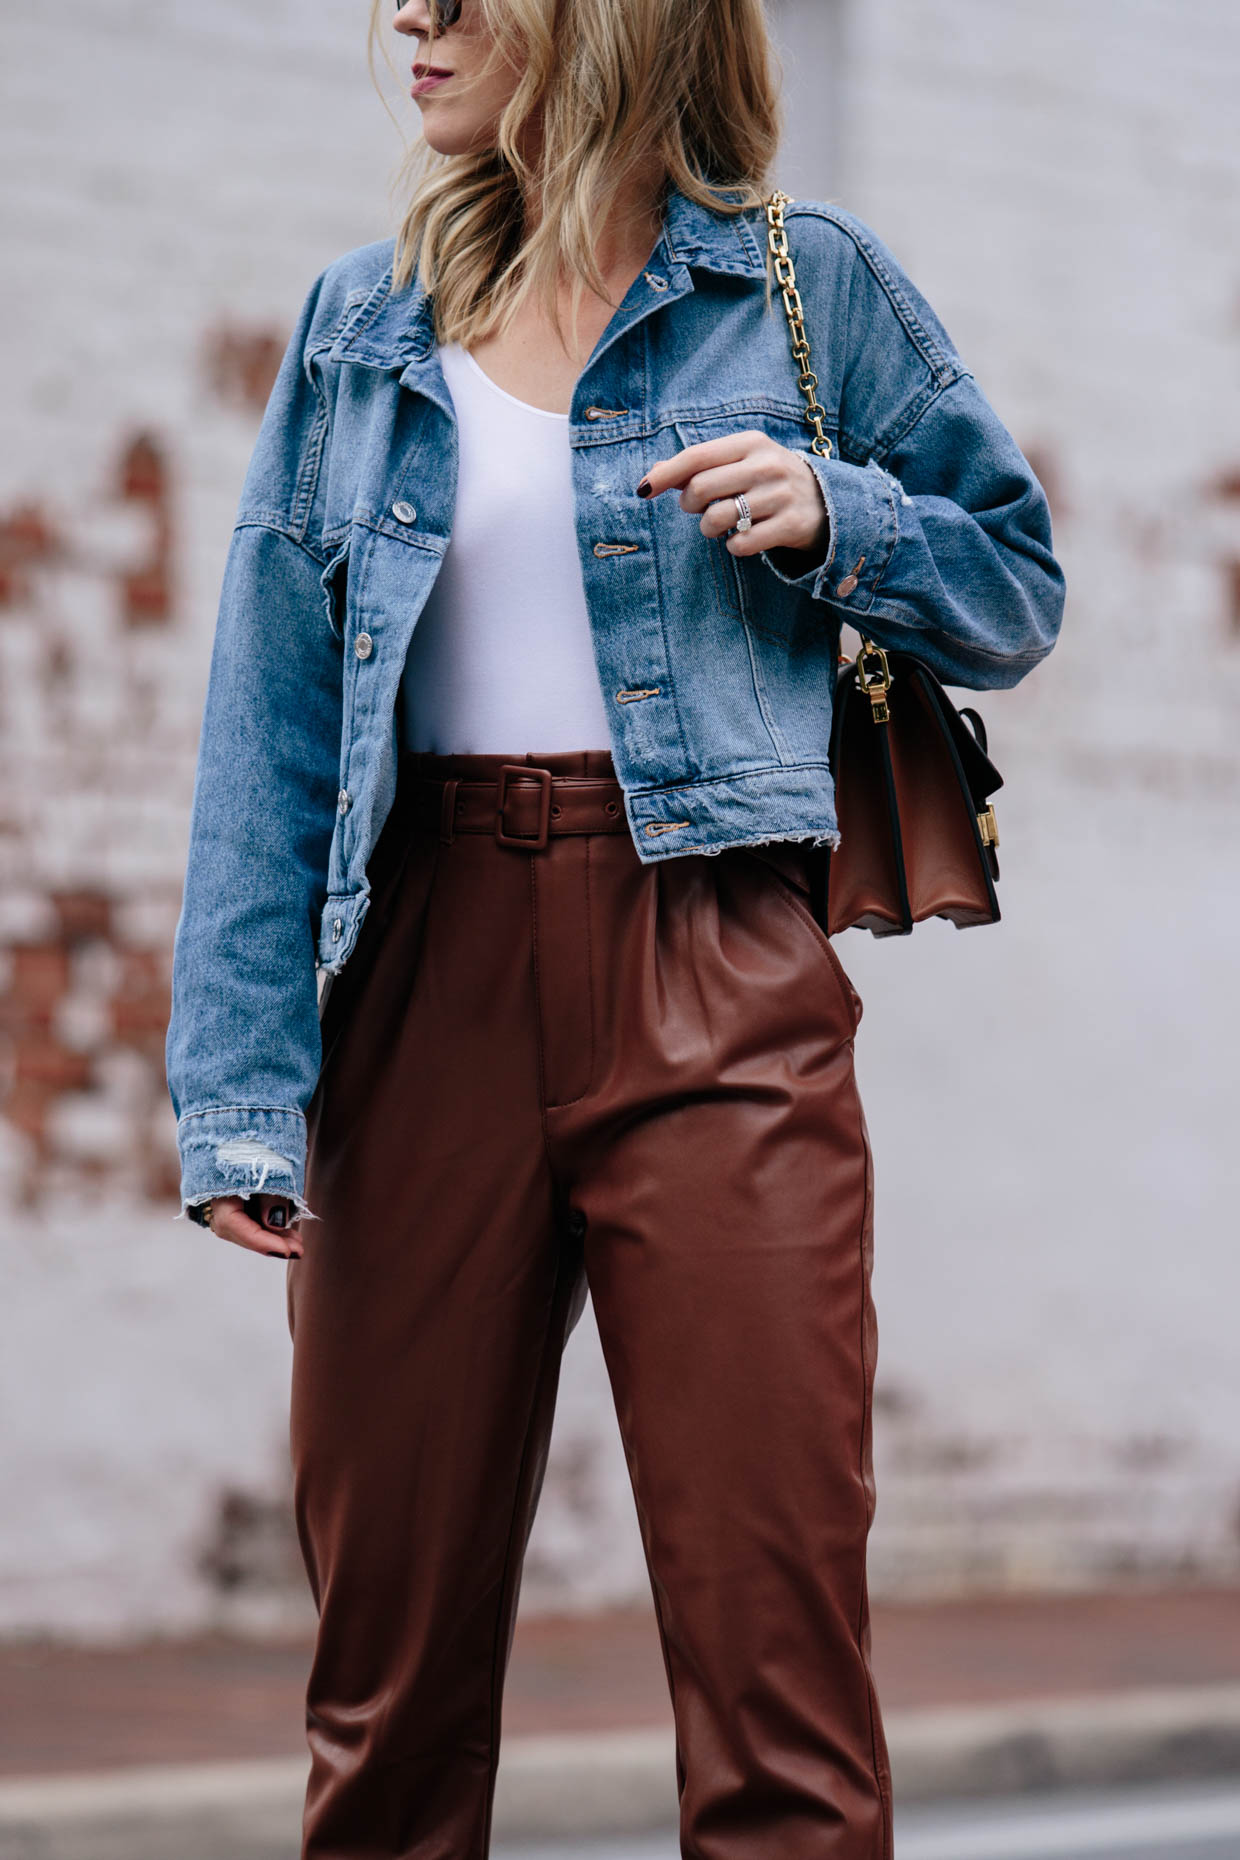 Meagan Brandon fashion blogger of Meagan's Moda wears brown